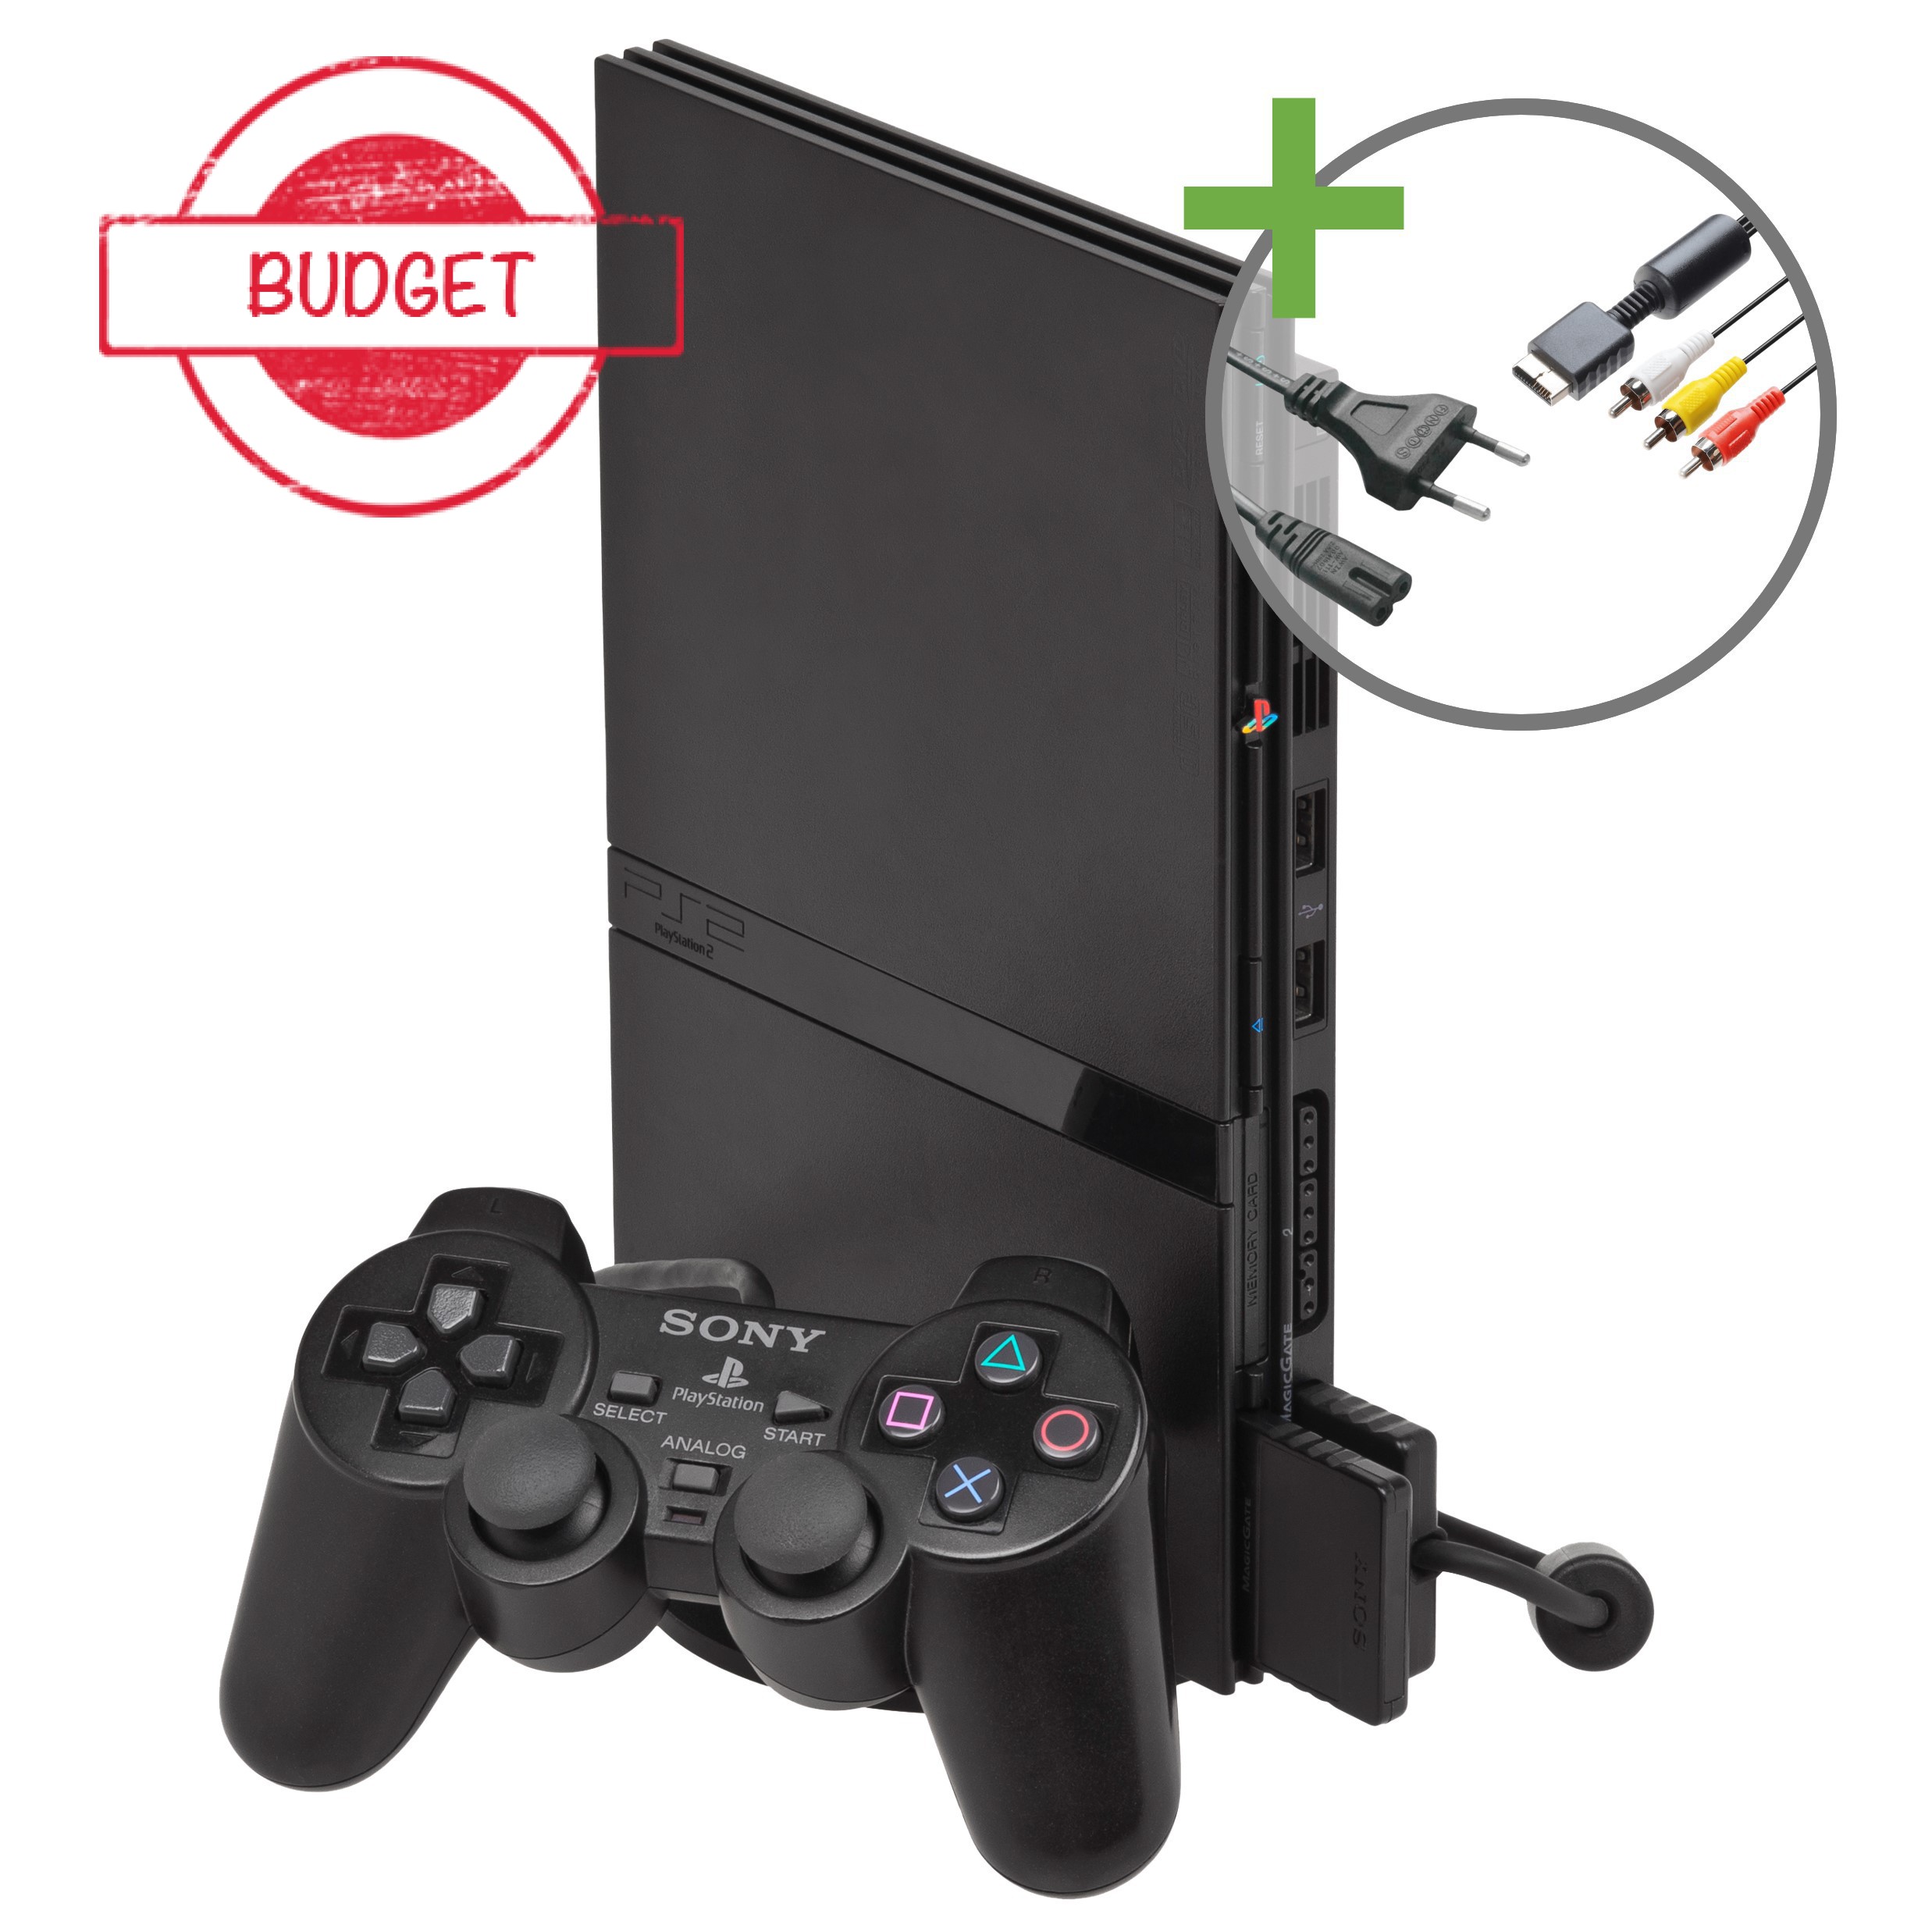 Sony PlayStation 2 Slim Starter Pack - Black Edition - Budget Kopen | Playstation 2 Hardware